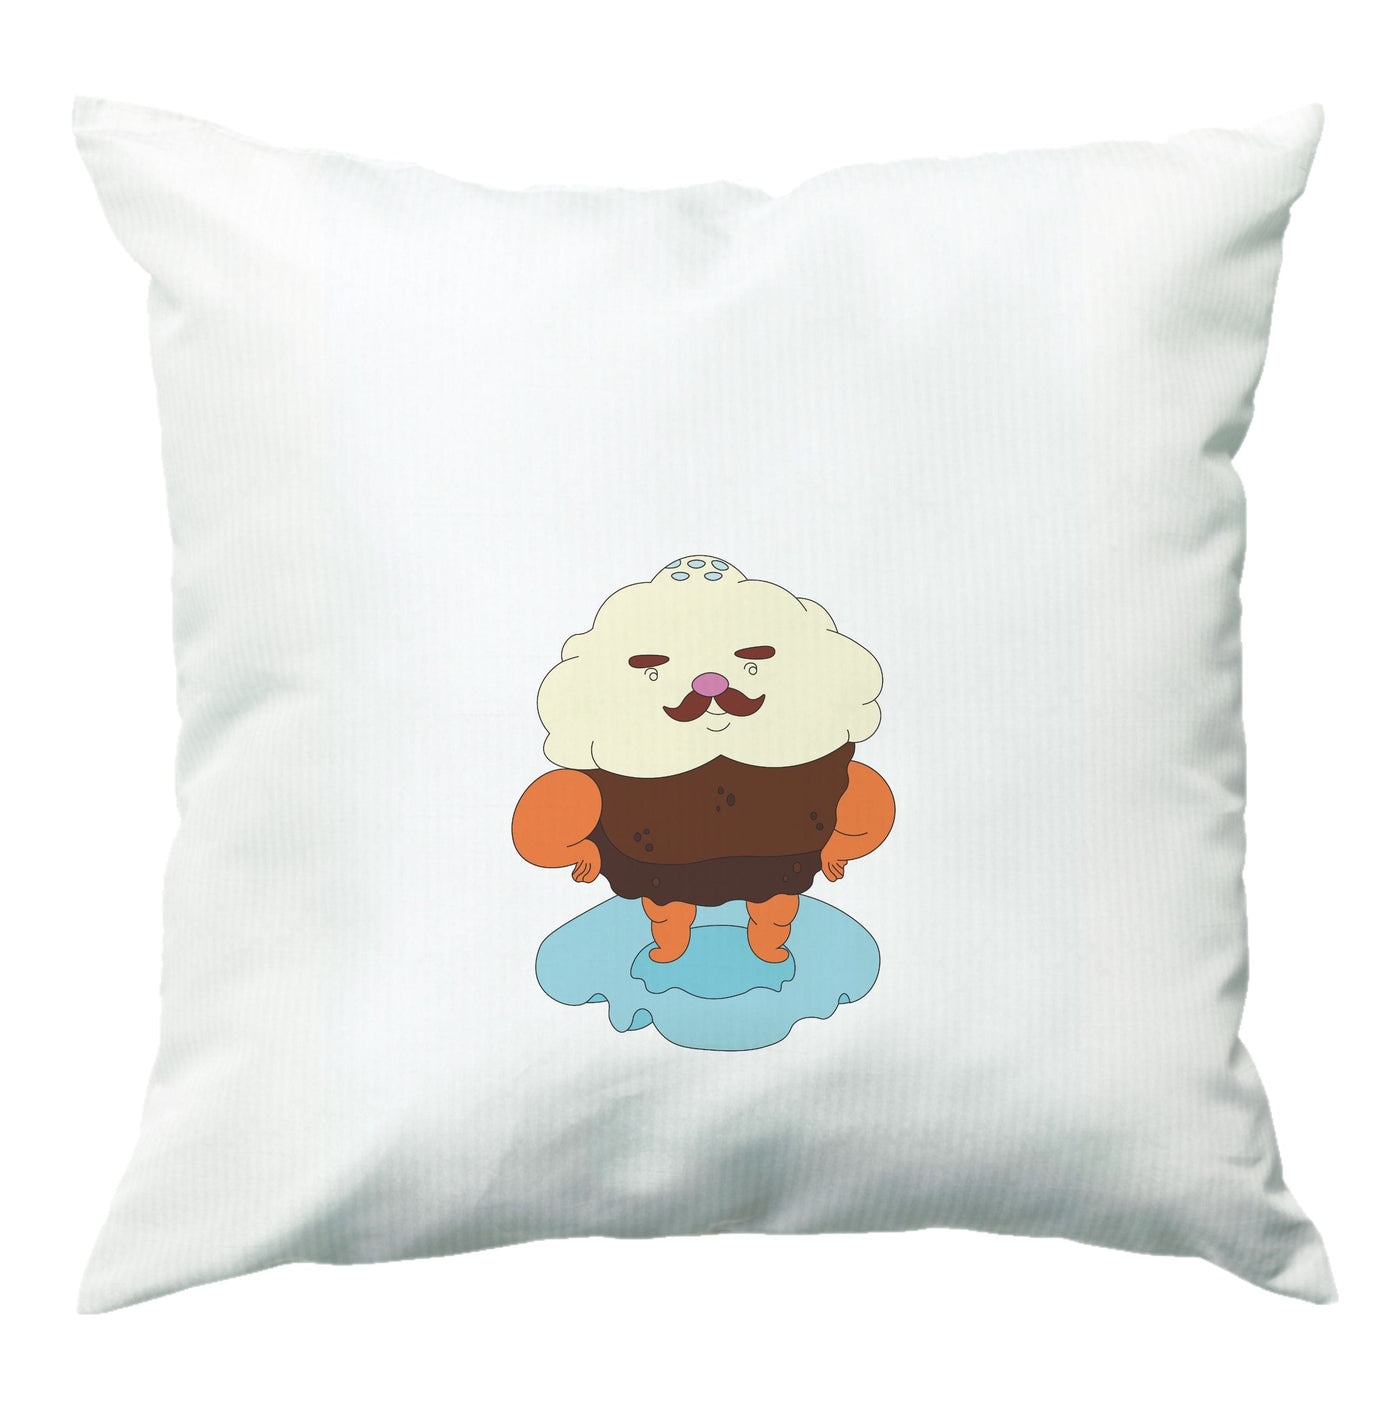 Mr Cupcake - Adventure Time Cushion